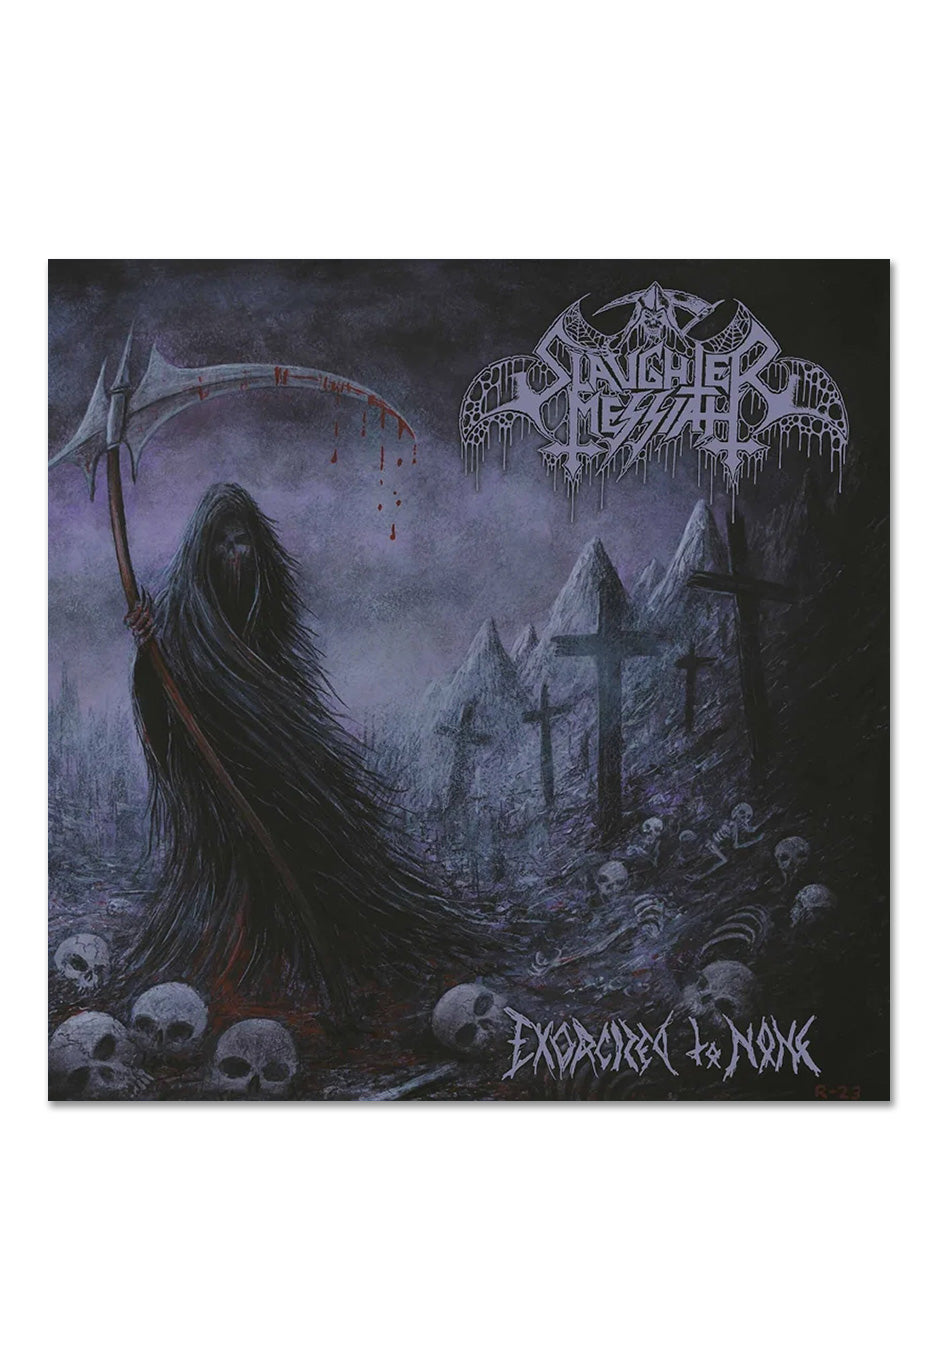 Slaughter Messiah - Exorcized To None Ltd.  - Vinyl